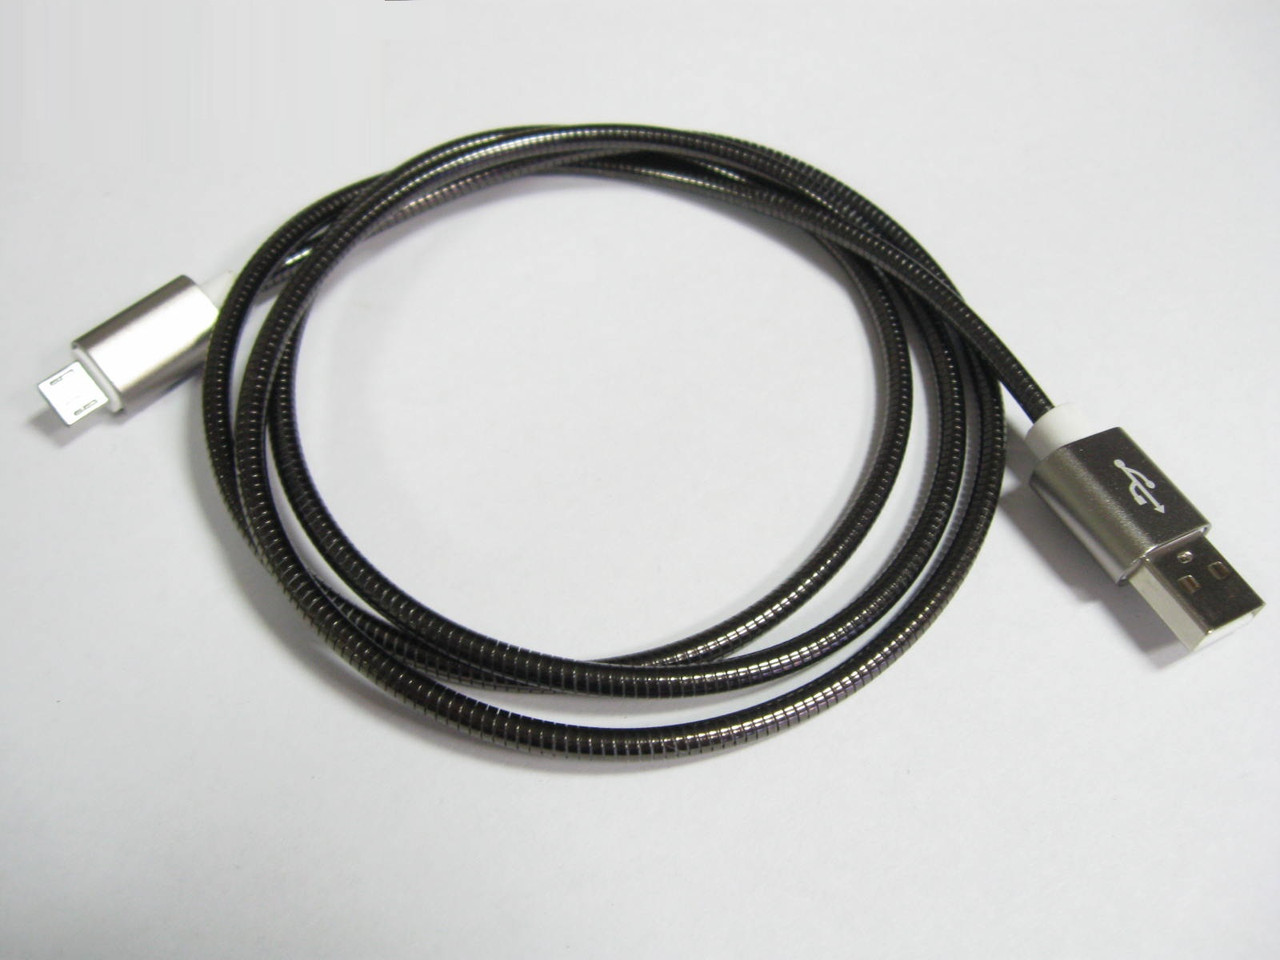 Прошивка микро. SFP+ direct attach Cable, 10g. Кабель sfp28 Mikrotik XS+da0003. Mikrotik SFP кабель. Патч-корд Mikrotik s+ao0005.